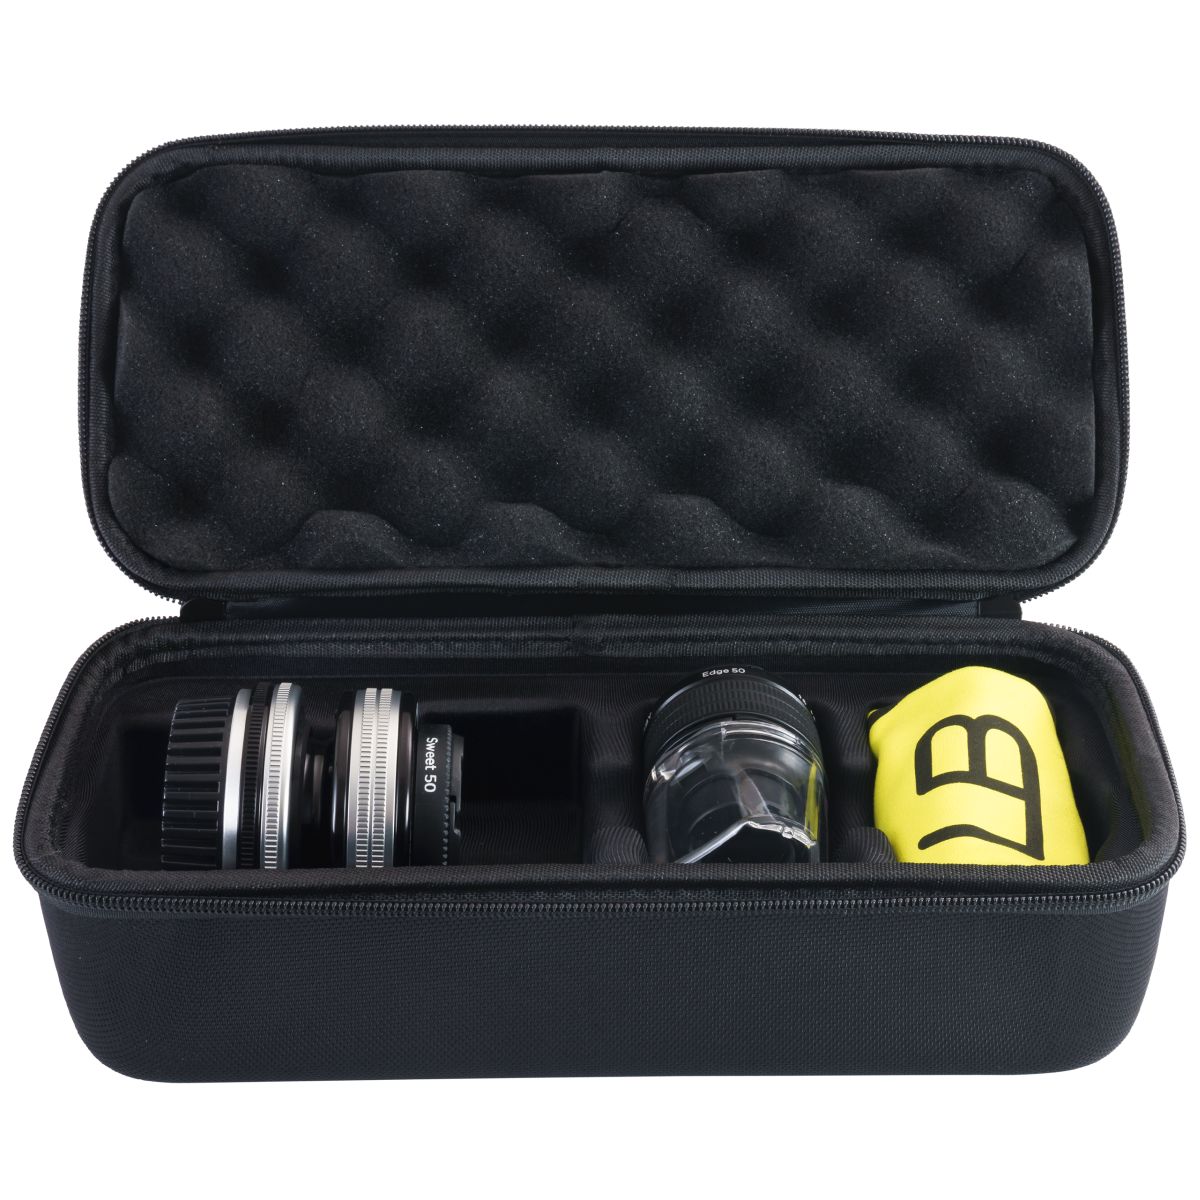 Lensbaby Optic Swap Intro Collection Nikon F